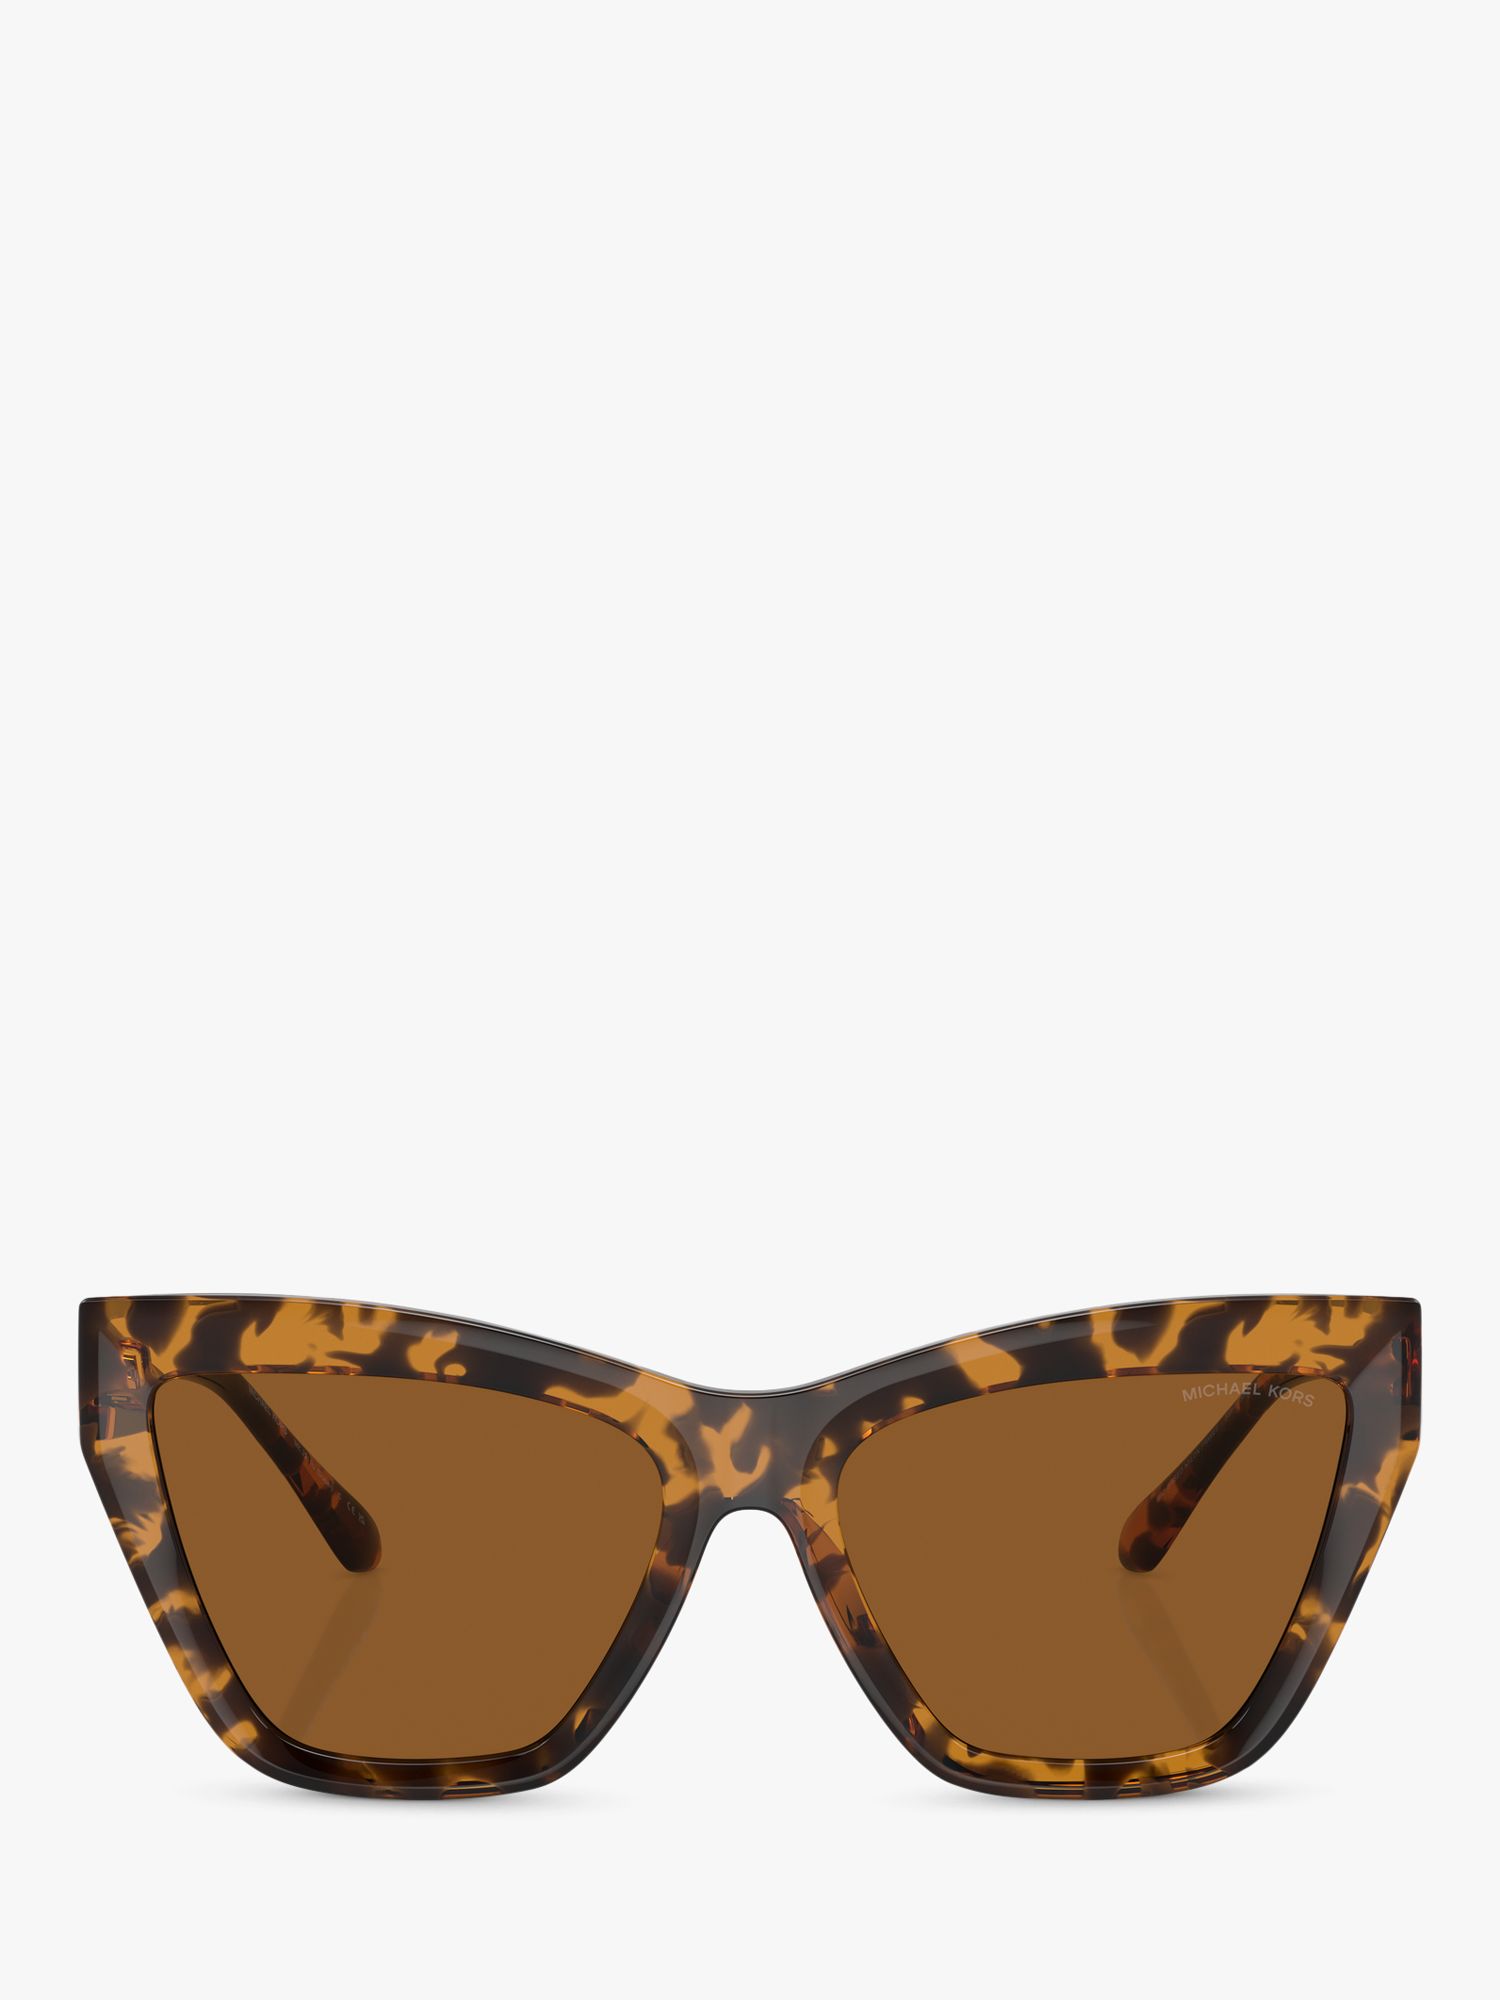 Michael Kors MK2211U Women's Dubai Cat's Eye Sunglasses, Dark Tortoise/Brown